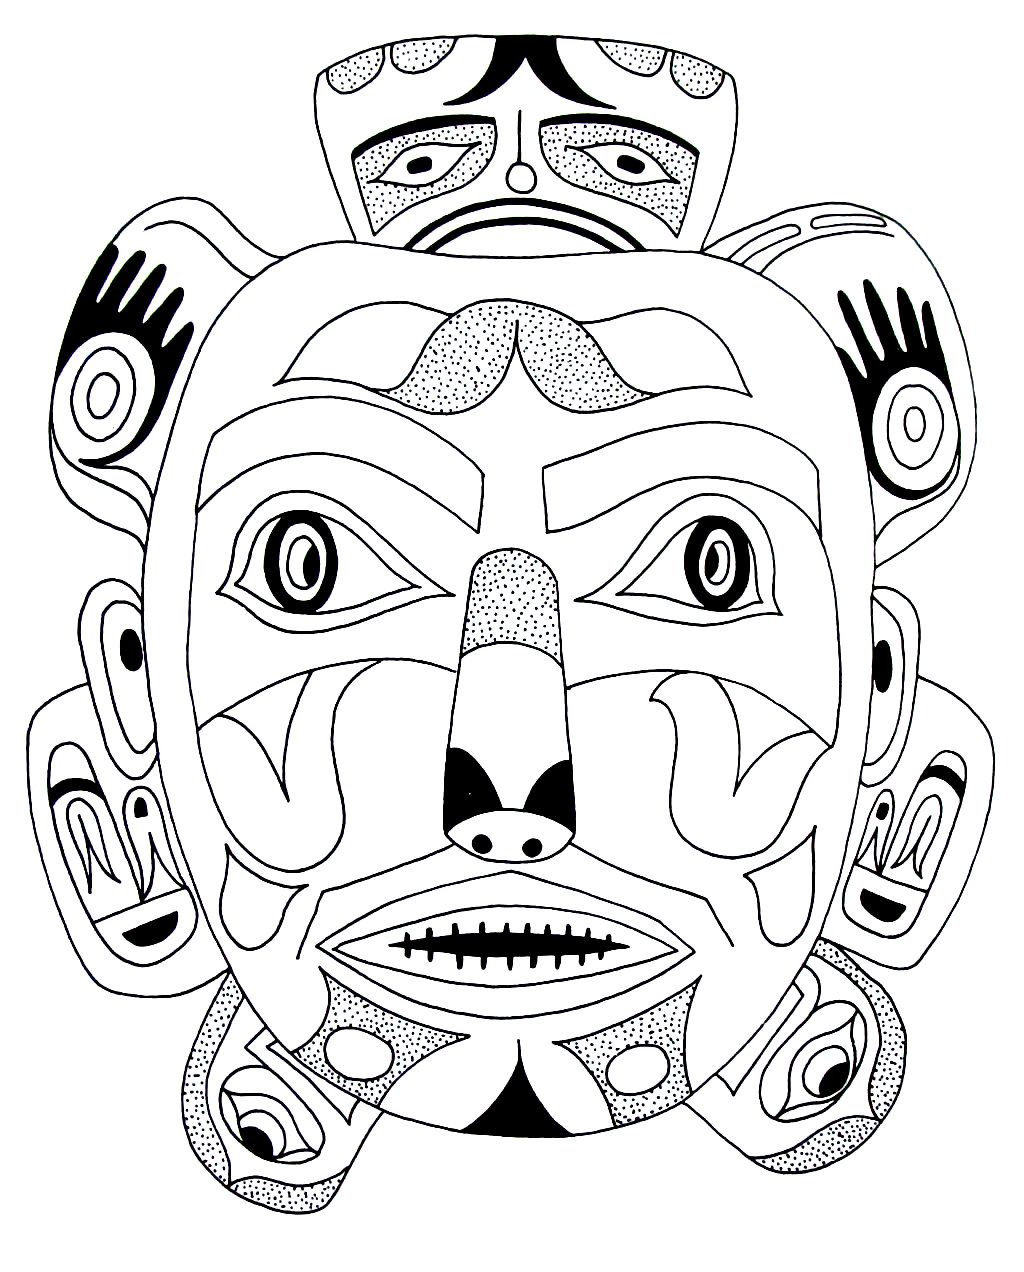 Bear Mask - Kwakiuti Indian Design coloring book page | Designs coloring  books, Coloring books, Coloring book pages